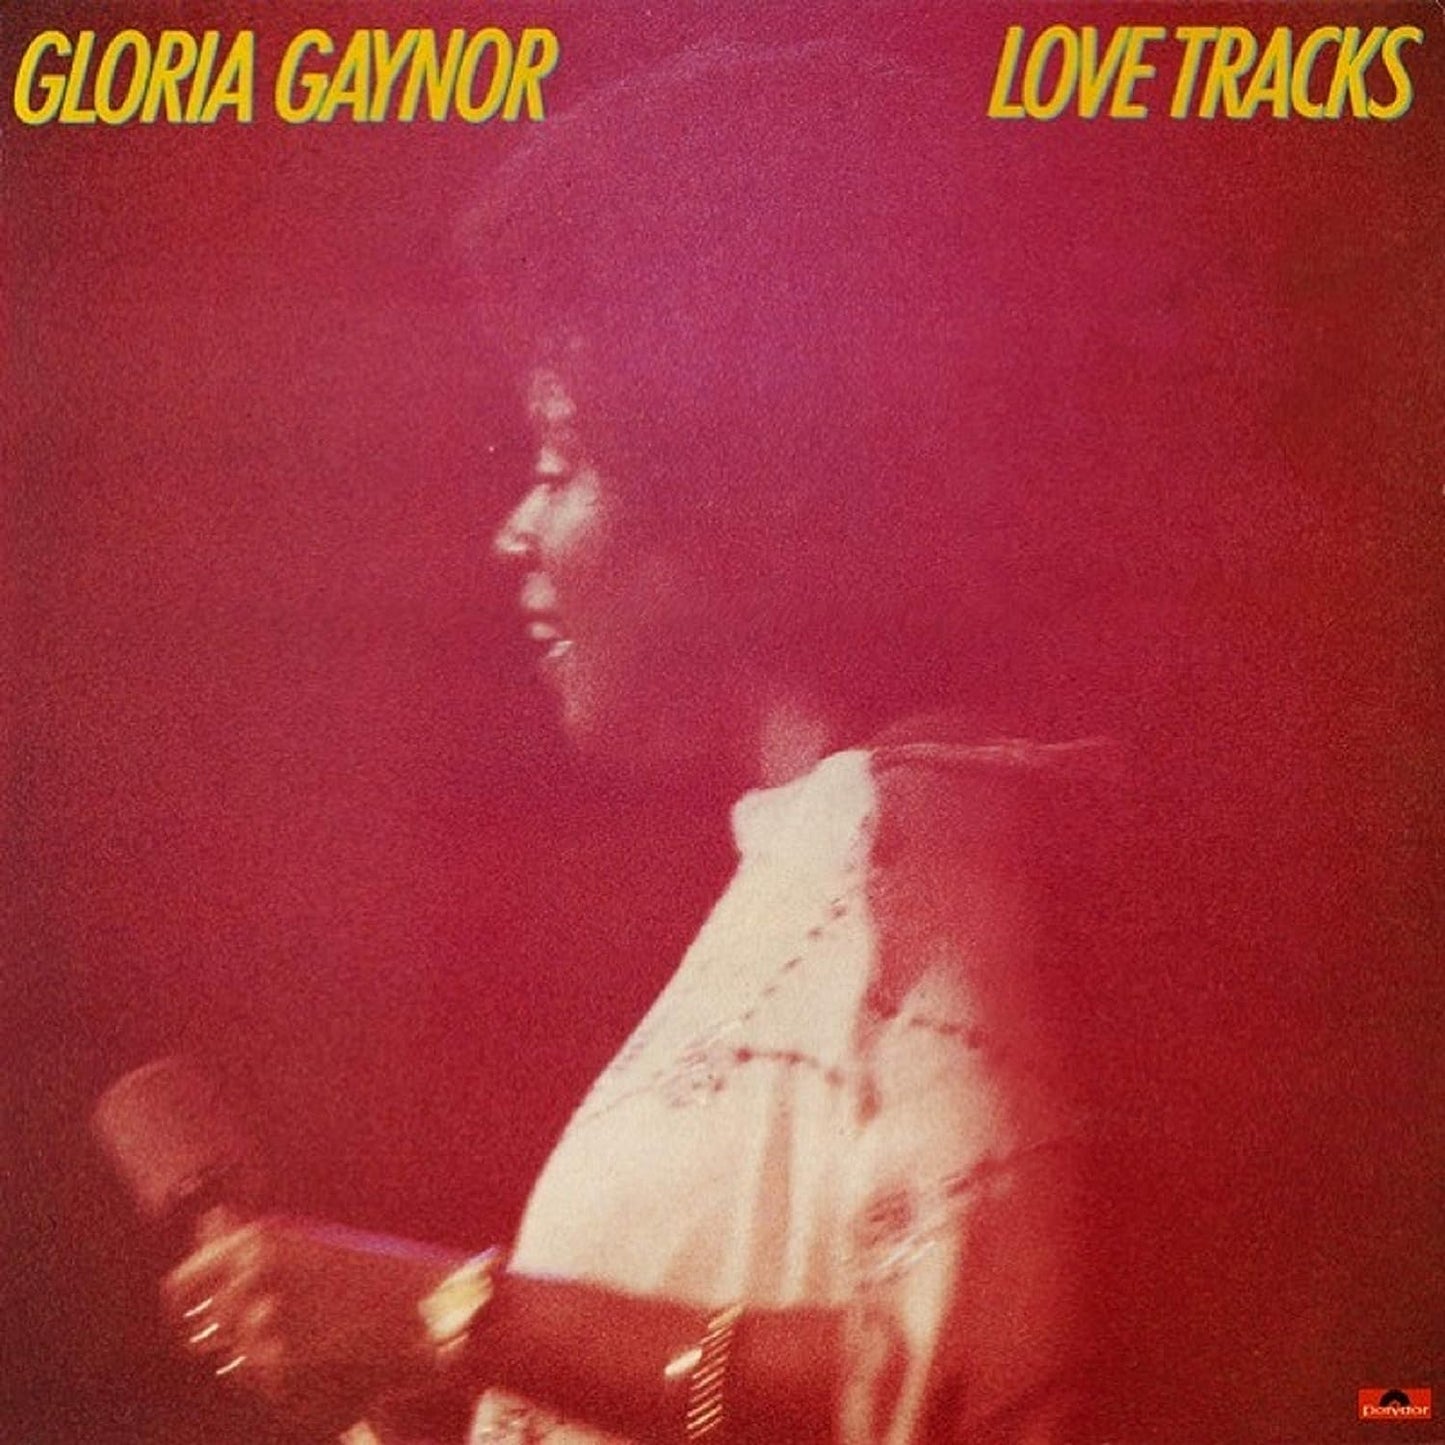 Gloria Gaynor - Love tracks